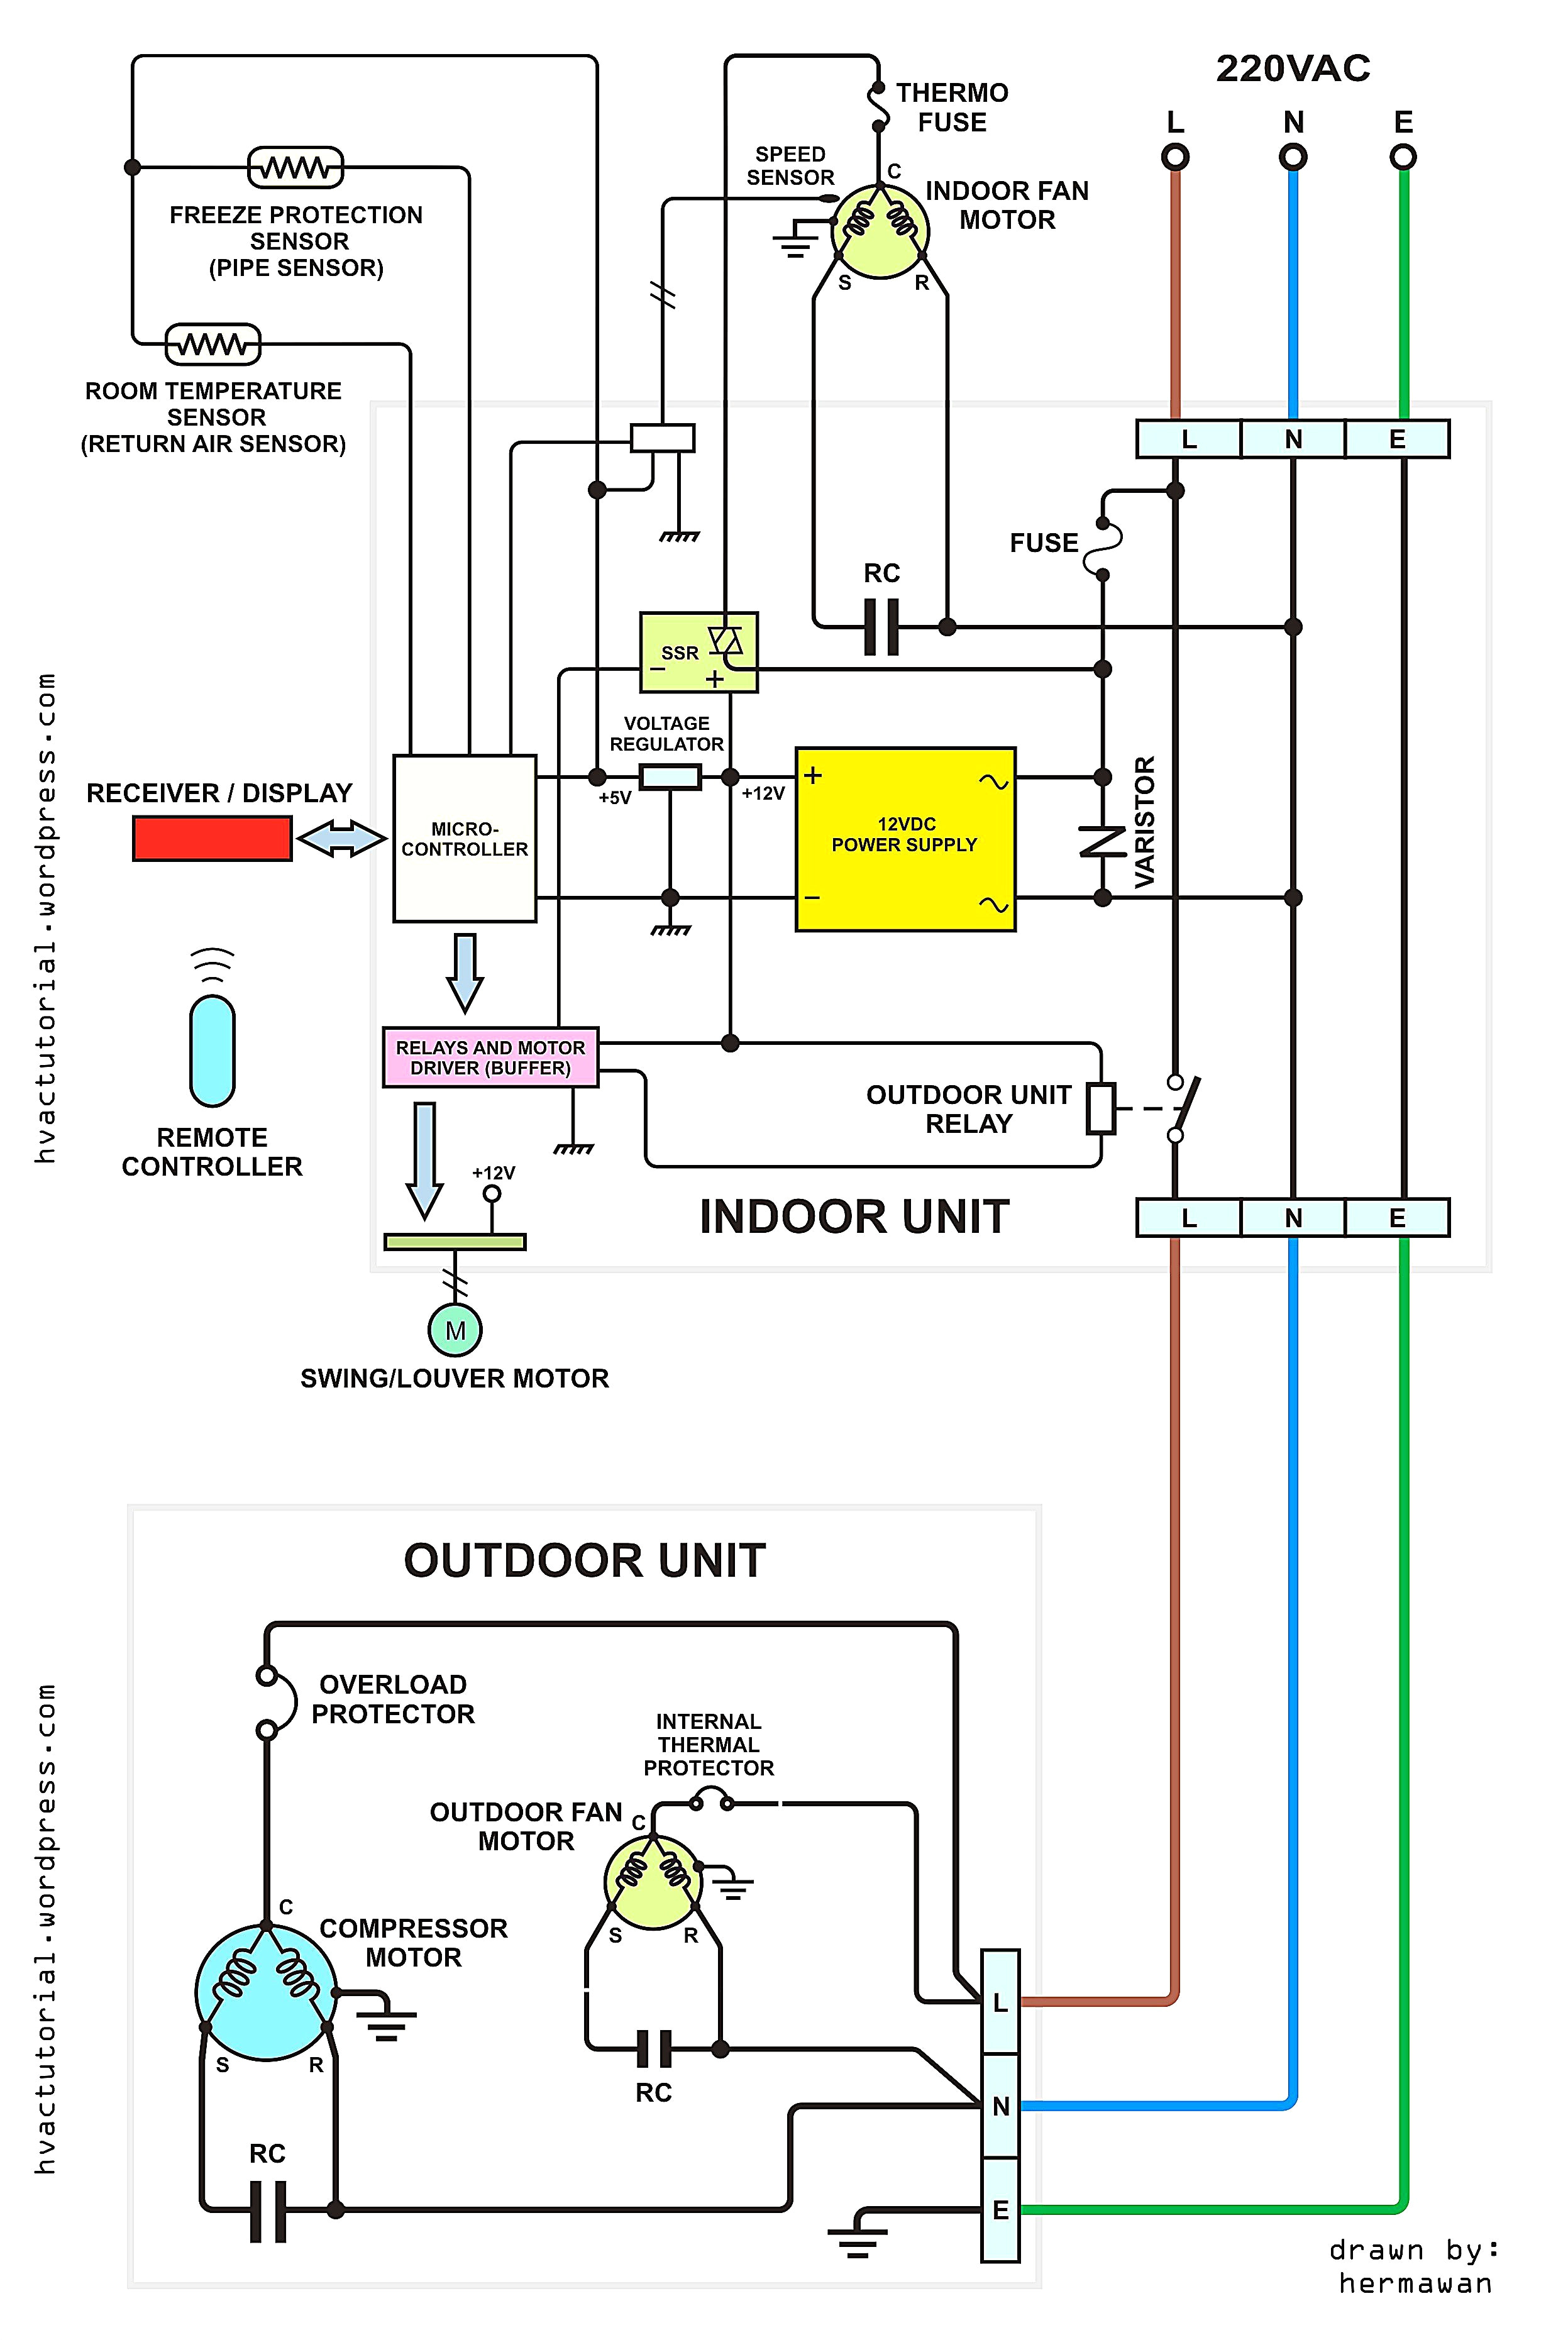 grundfos pump wiring diagram best of grundfos pump motor wiring diagrams wiring diagram amp fuse box e280a2 jpg